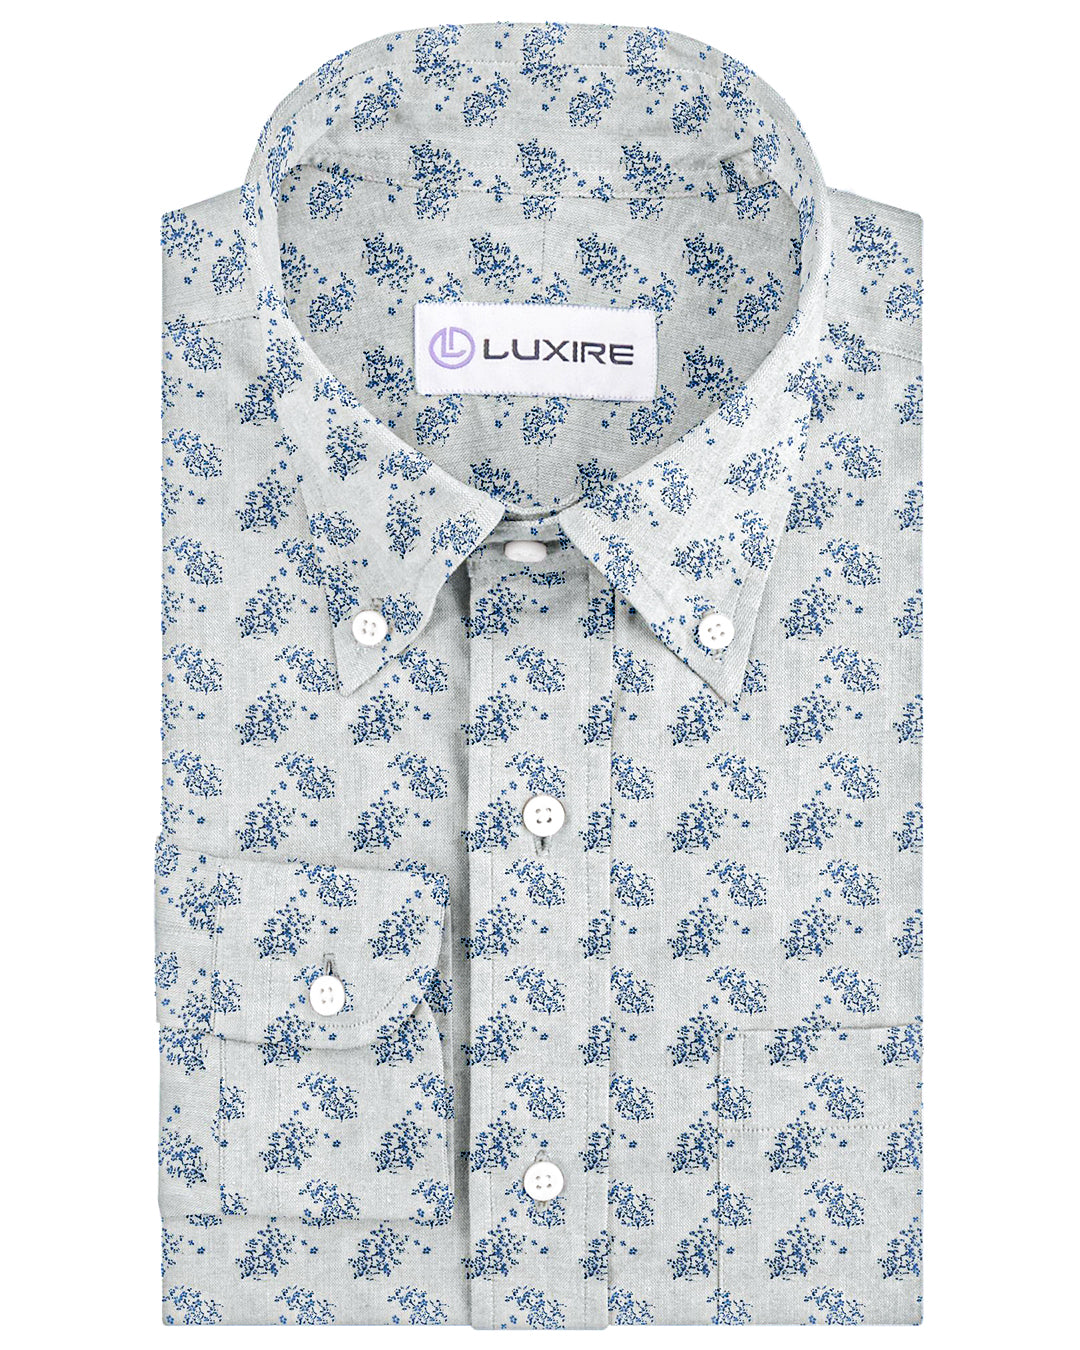 Front view of custom linen shirt for men in pale blue printed shrubs